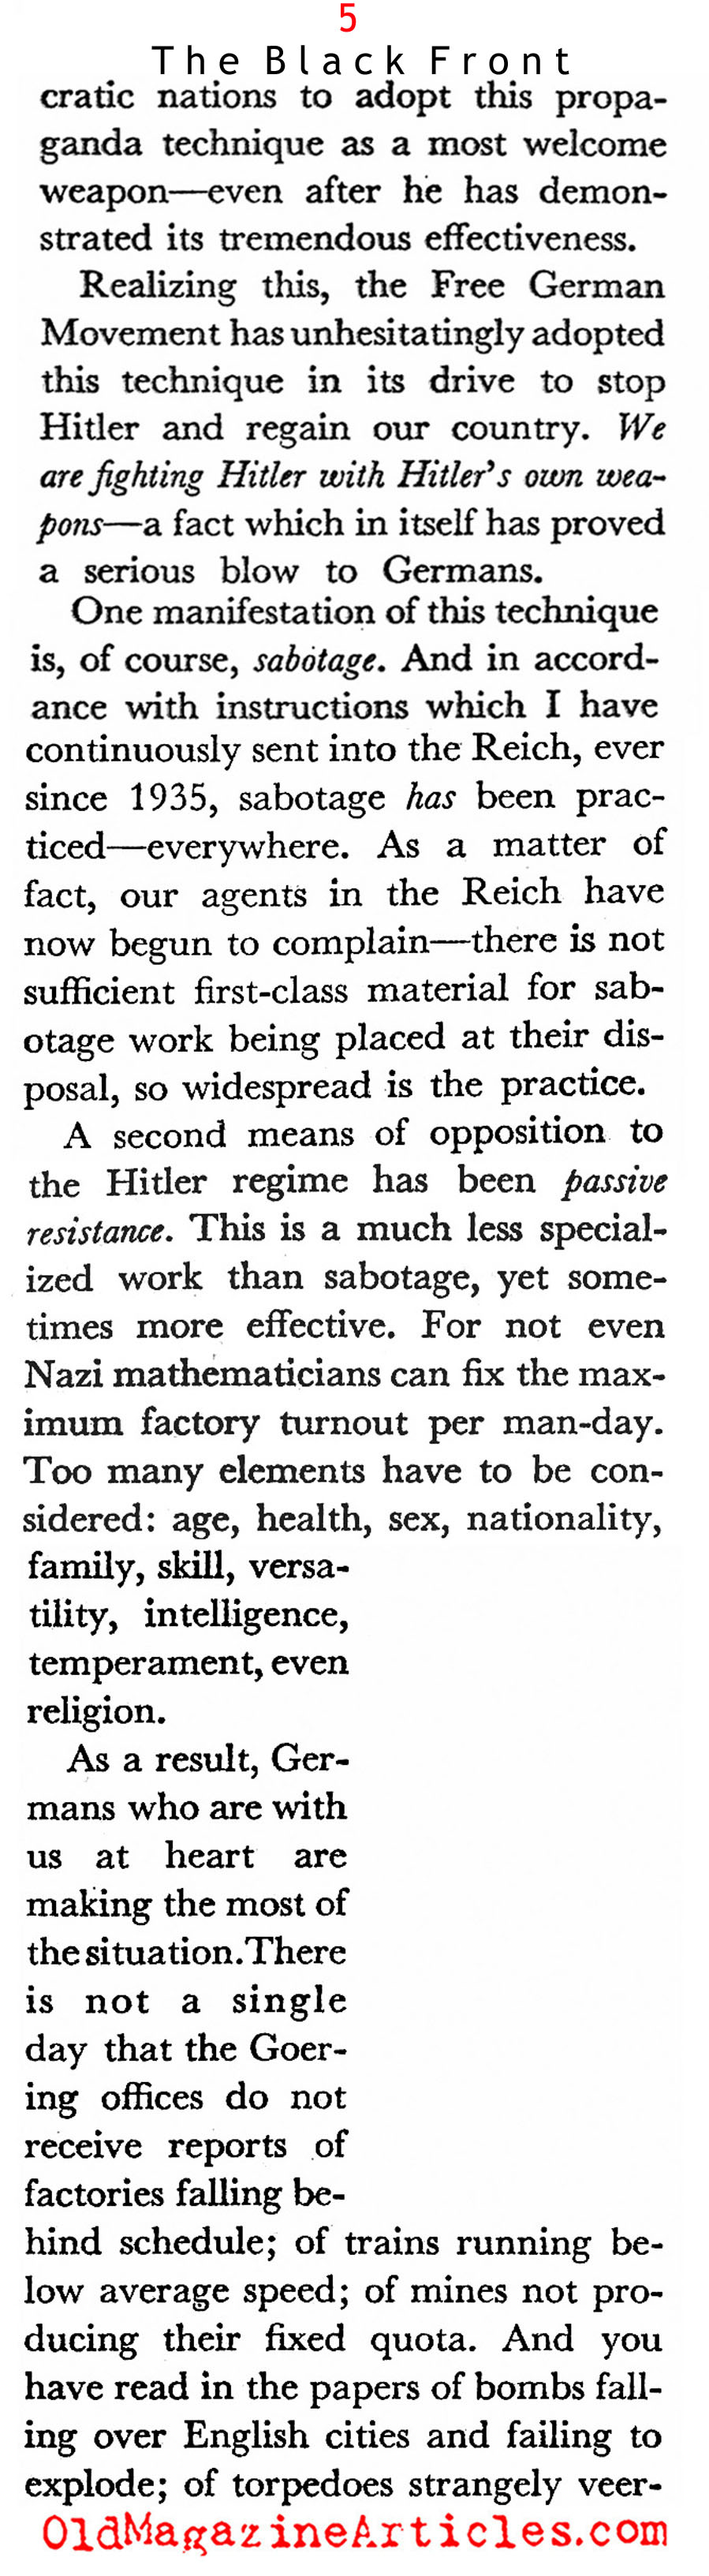 The German Resistance (Coronet Magazine, 1941)